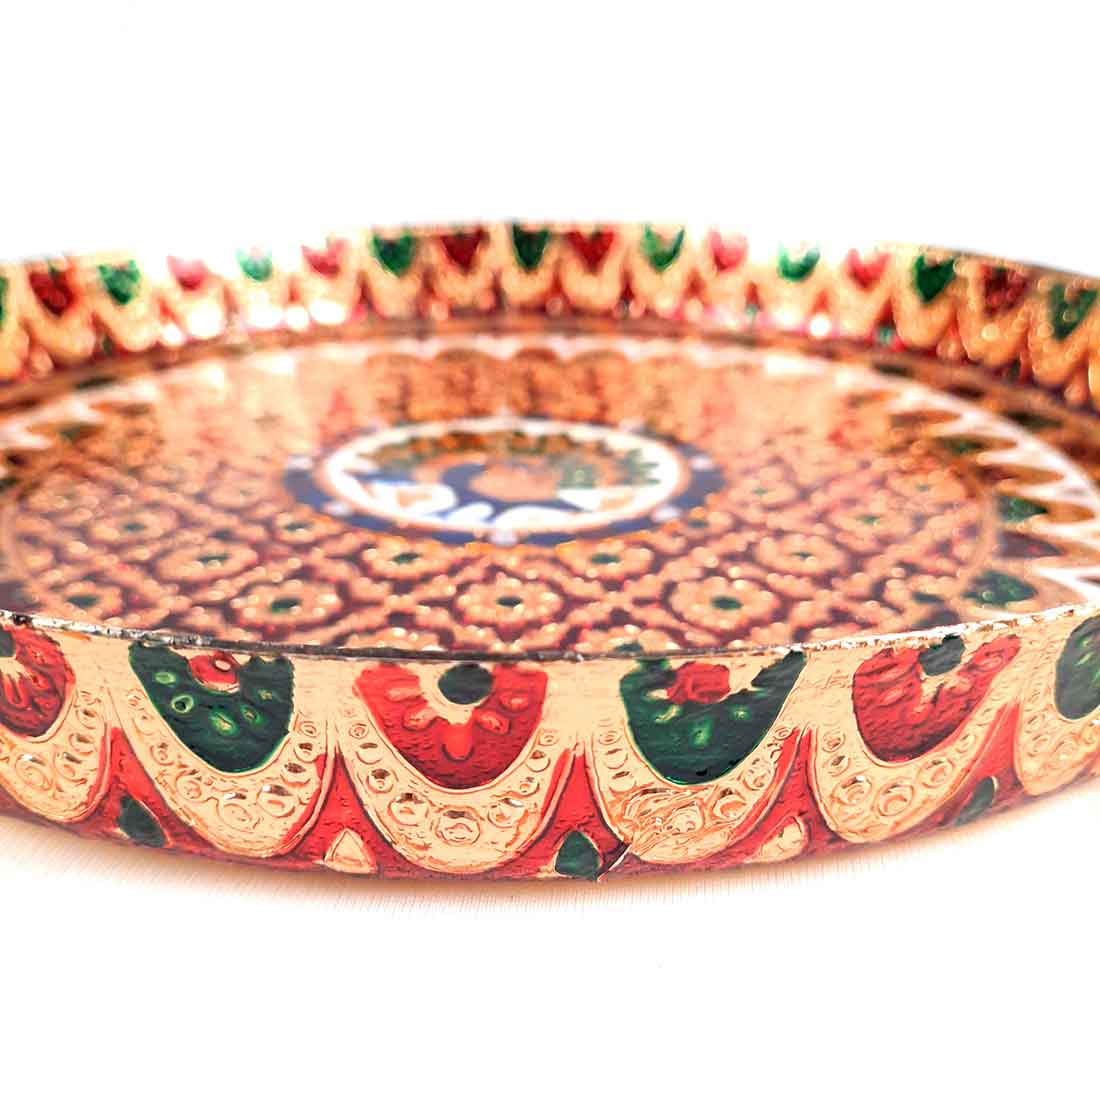 Meenakari Pooja Plate | Aarti Thali - For Pooja, Weddings & Festivals - 13 Inch - ApkaMart